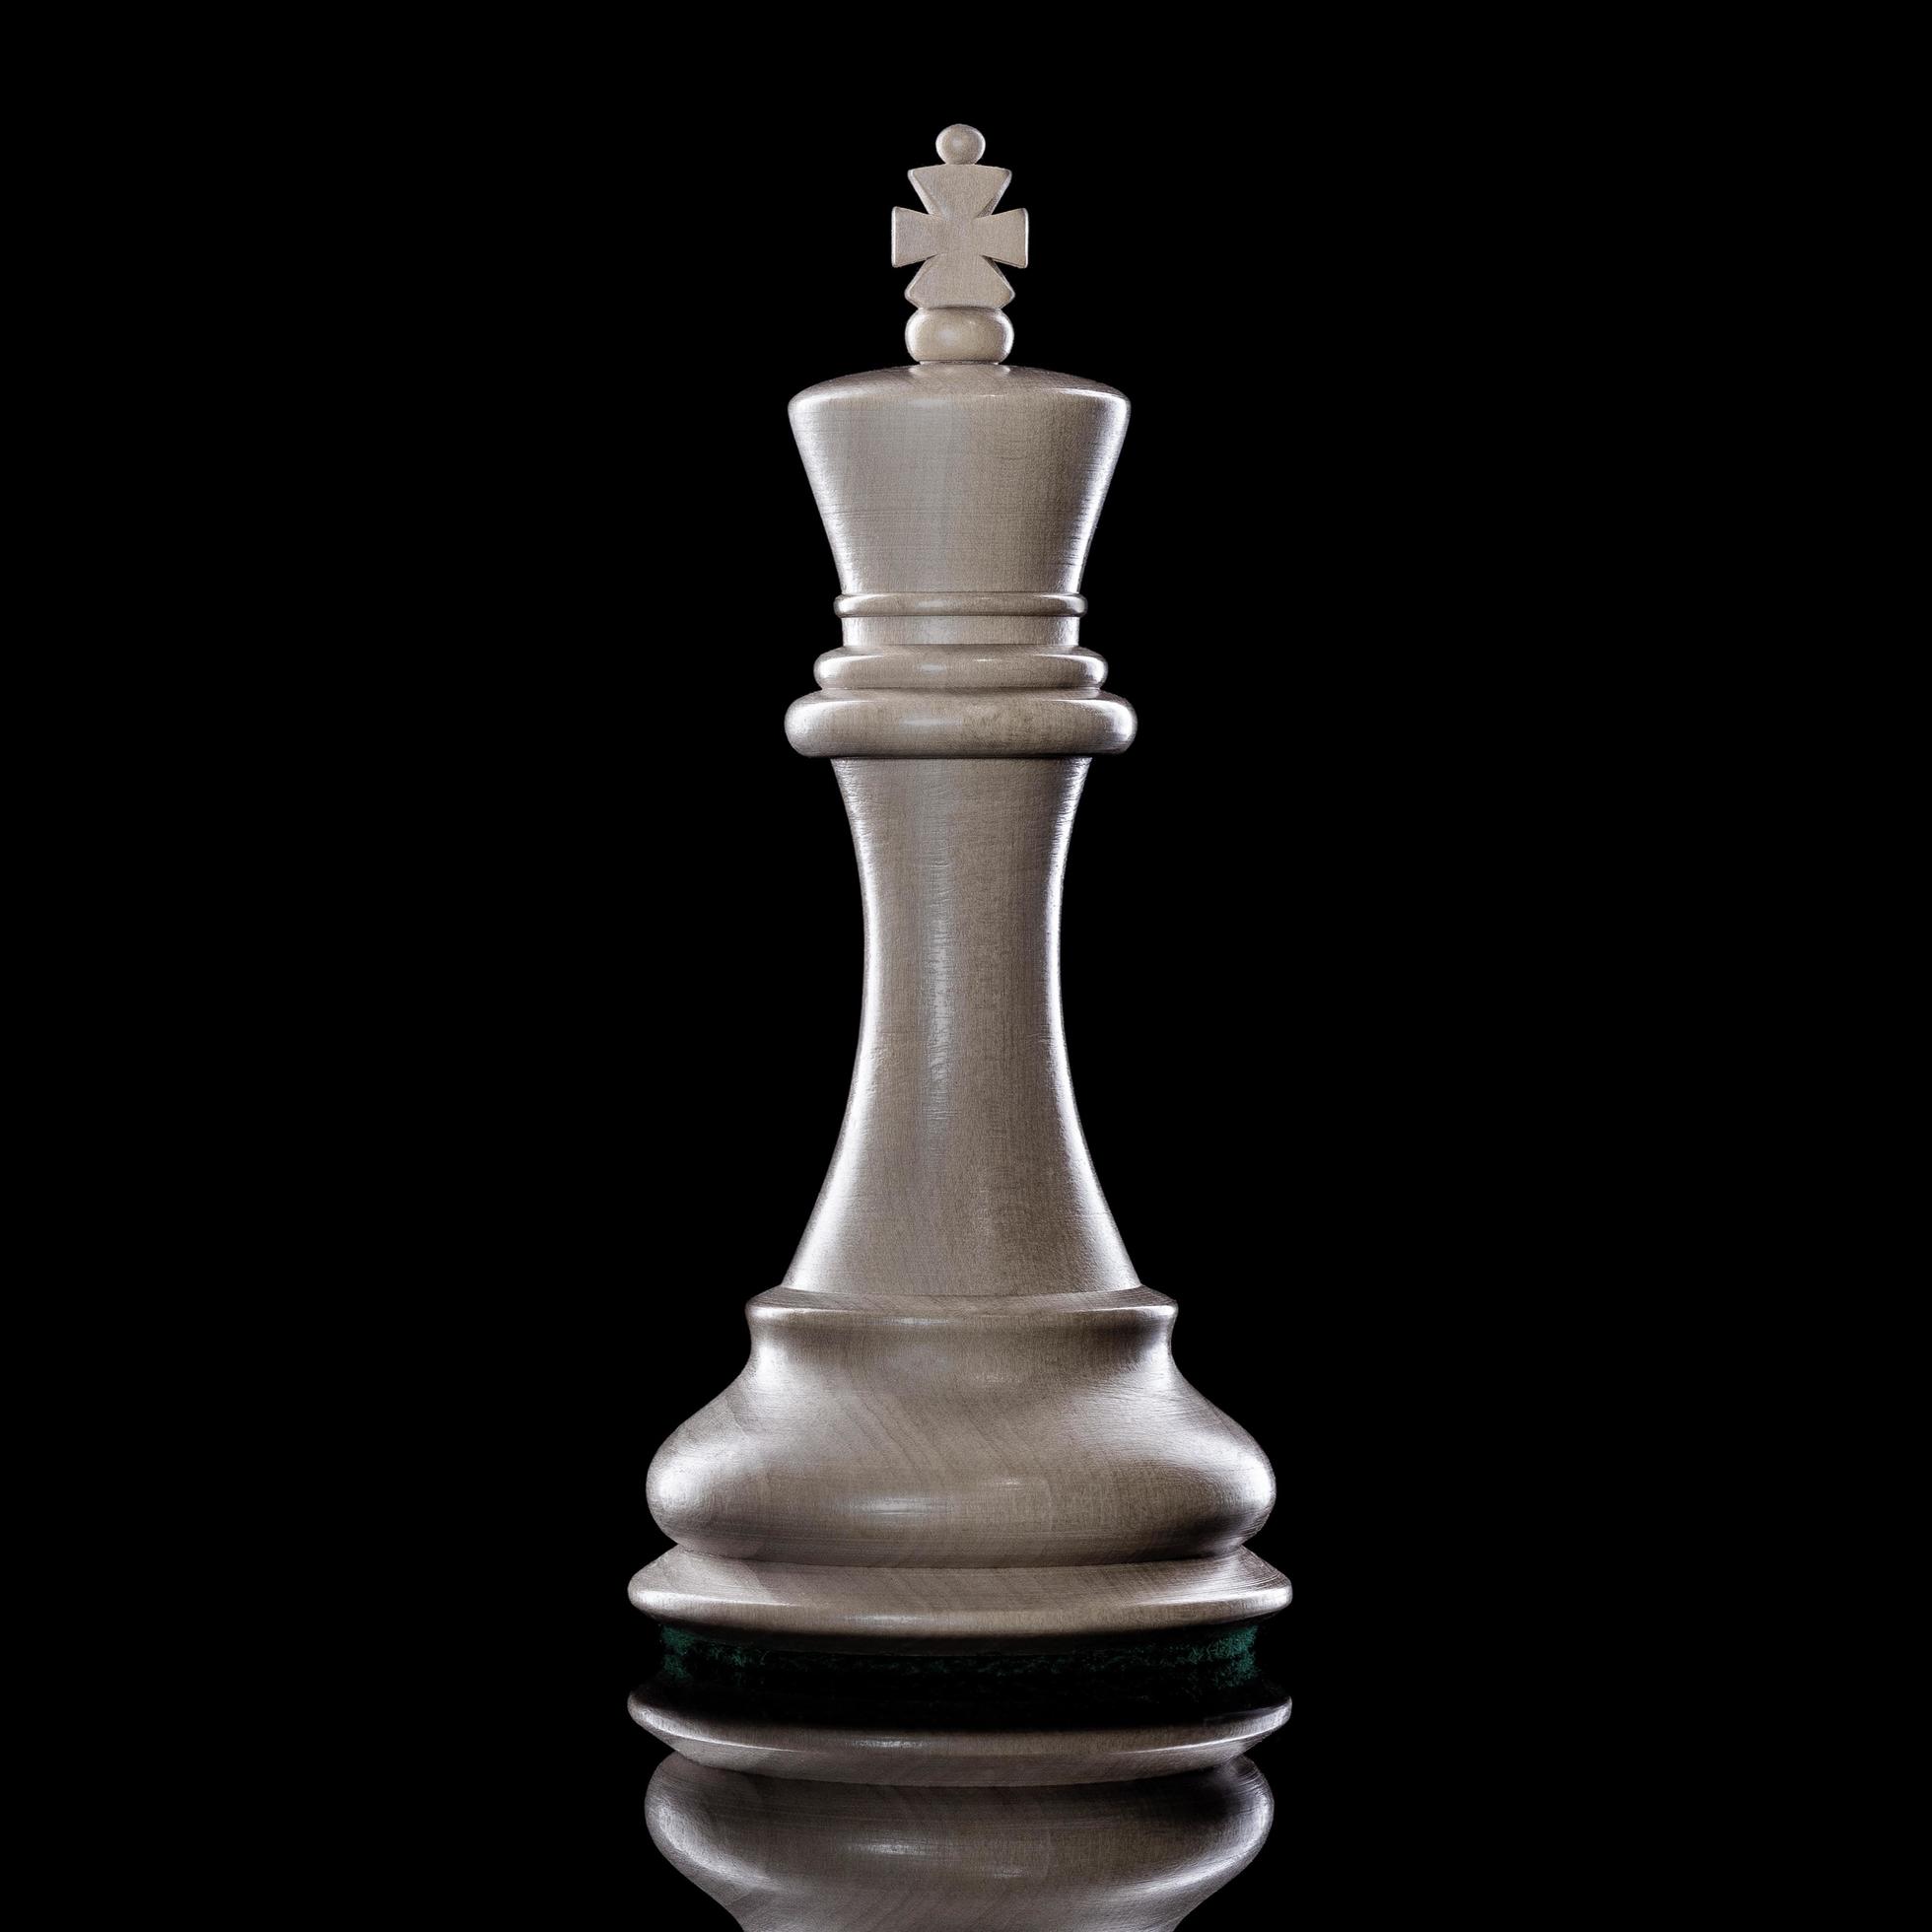 Abertura Da Xadrez Defesa De Pirc Imagem de Stock - Imagem de xadrez,  preto: 109101559